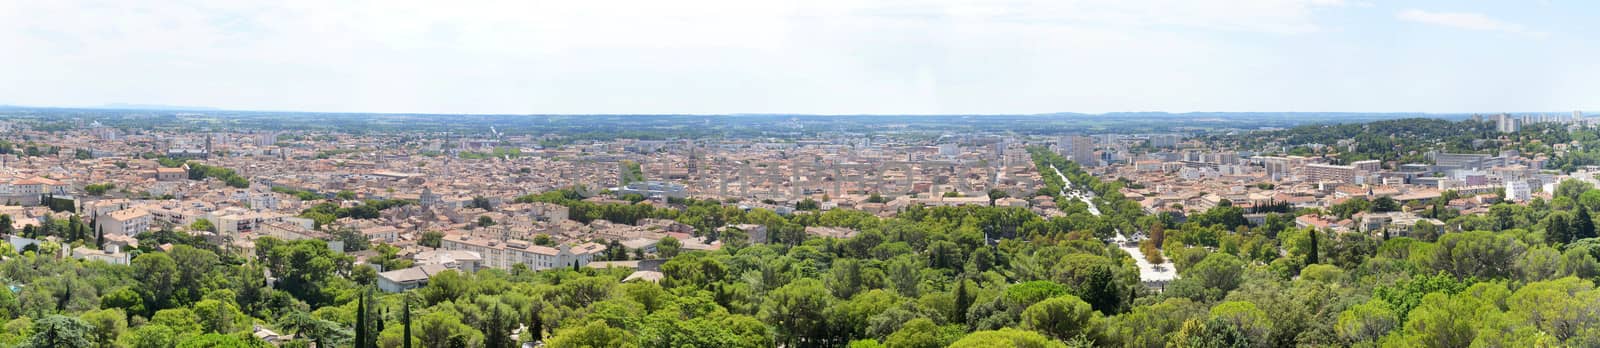 panorama of Nimes by cynoclub